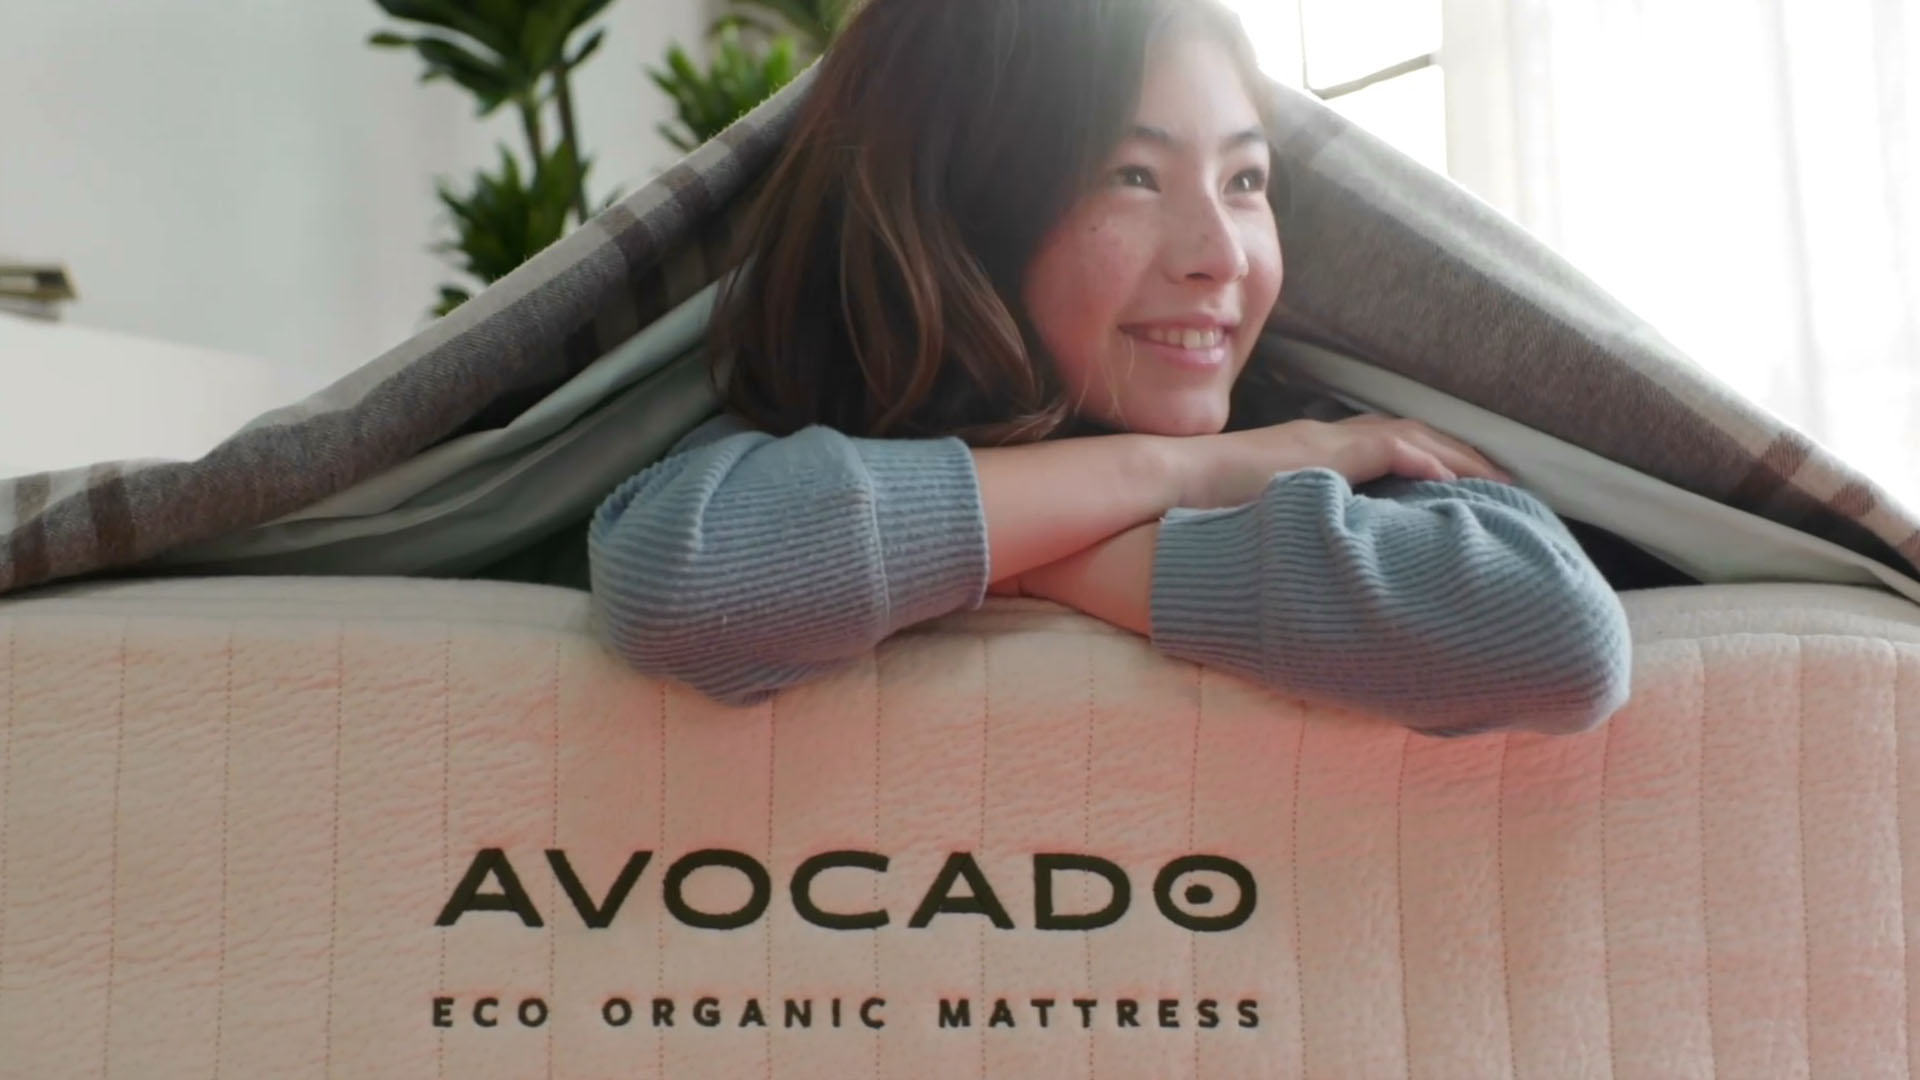 Who sells Avocado mattress near me in Ellicott City